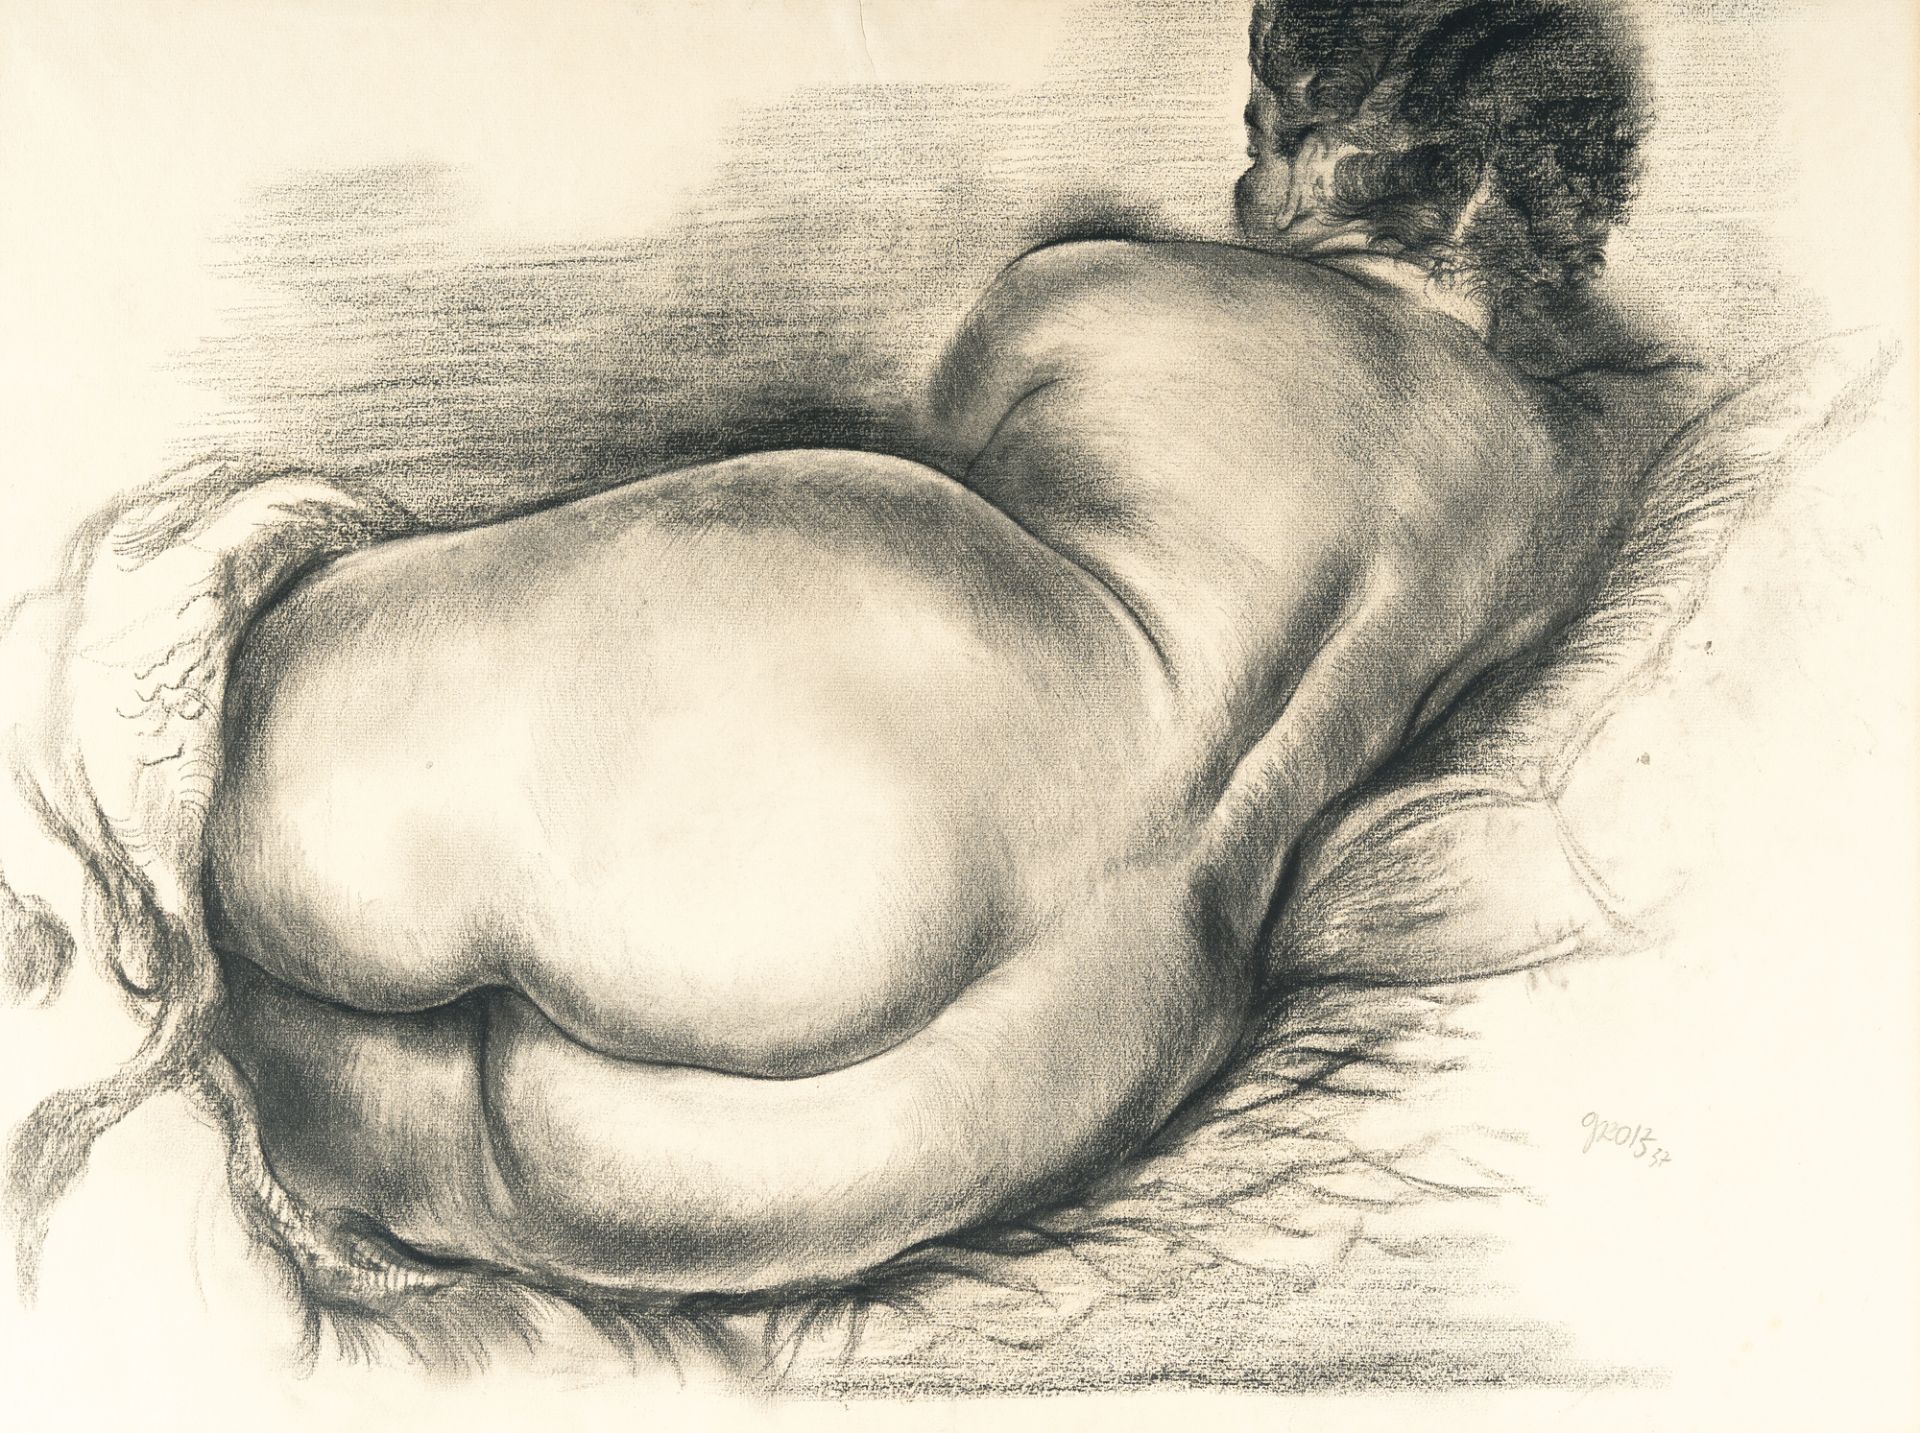 George Grosz (1893 - Berlin - 1959), Recumbent Female NudeCharcoal on Ingres laid paper by